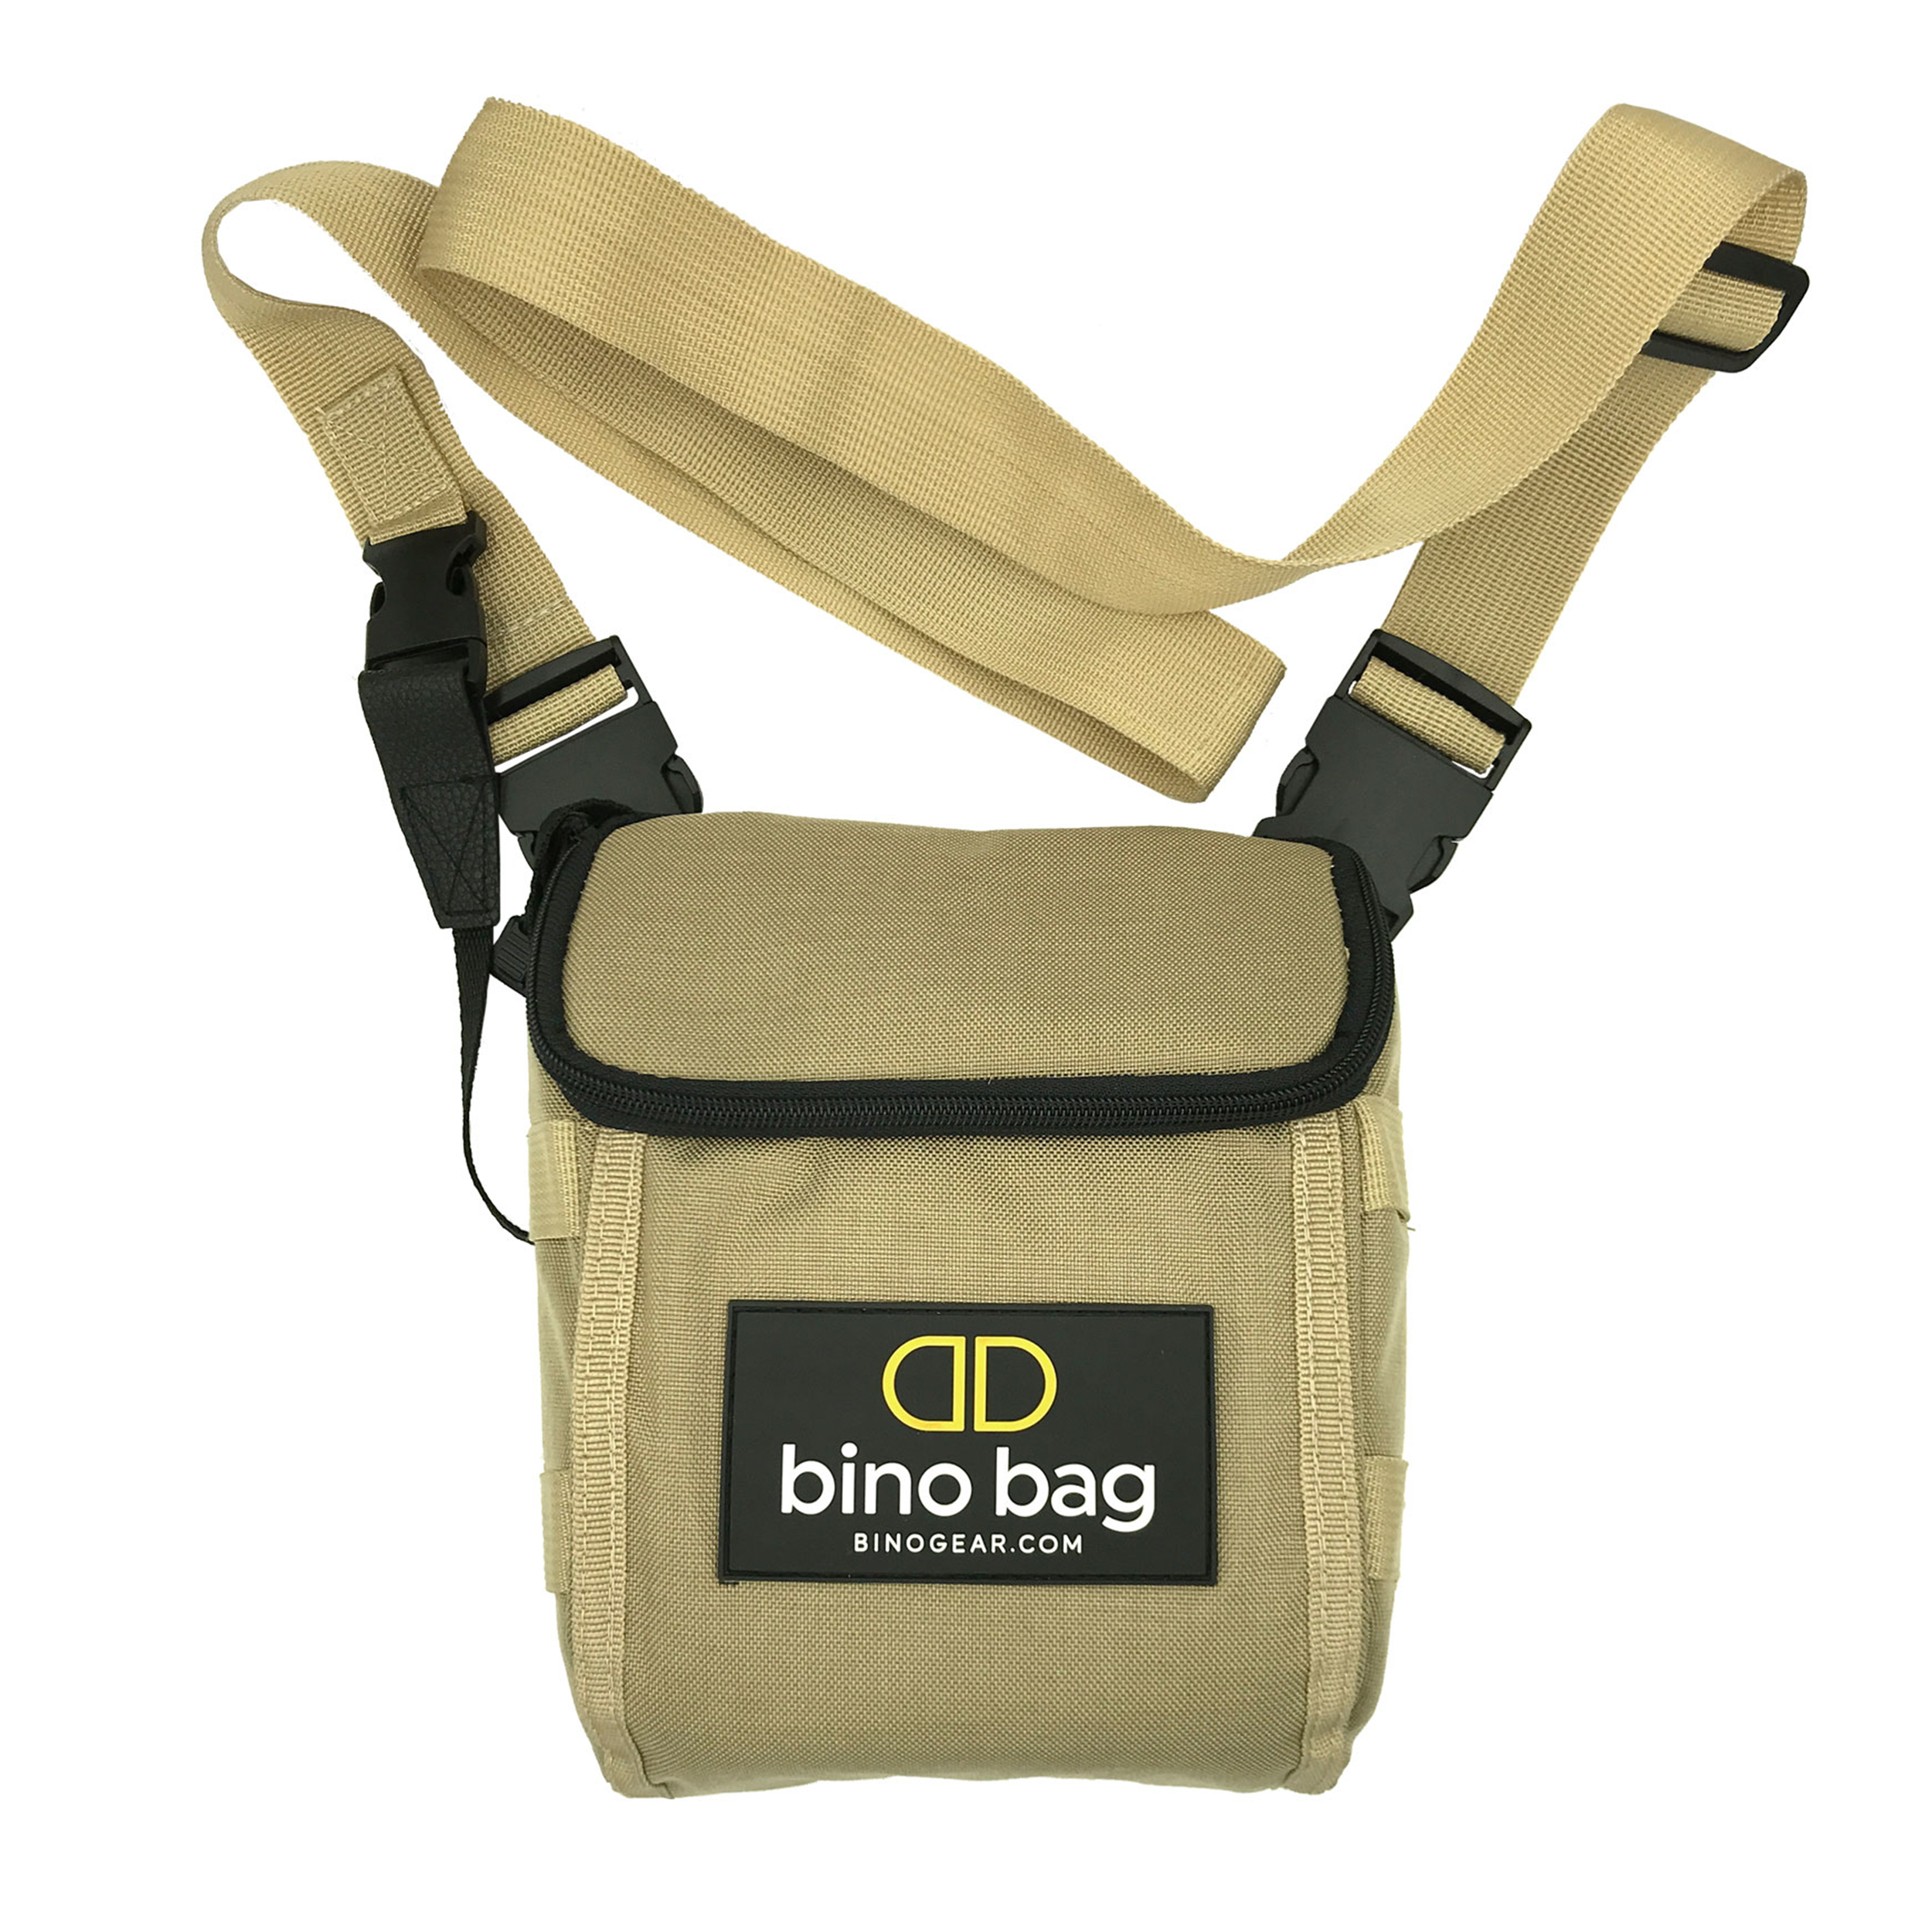 BINO DOCK BINO BAG TAN INCLUDES 3 STRAPS & SAFETY CRD